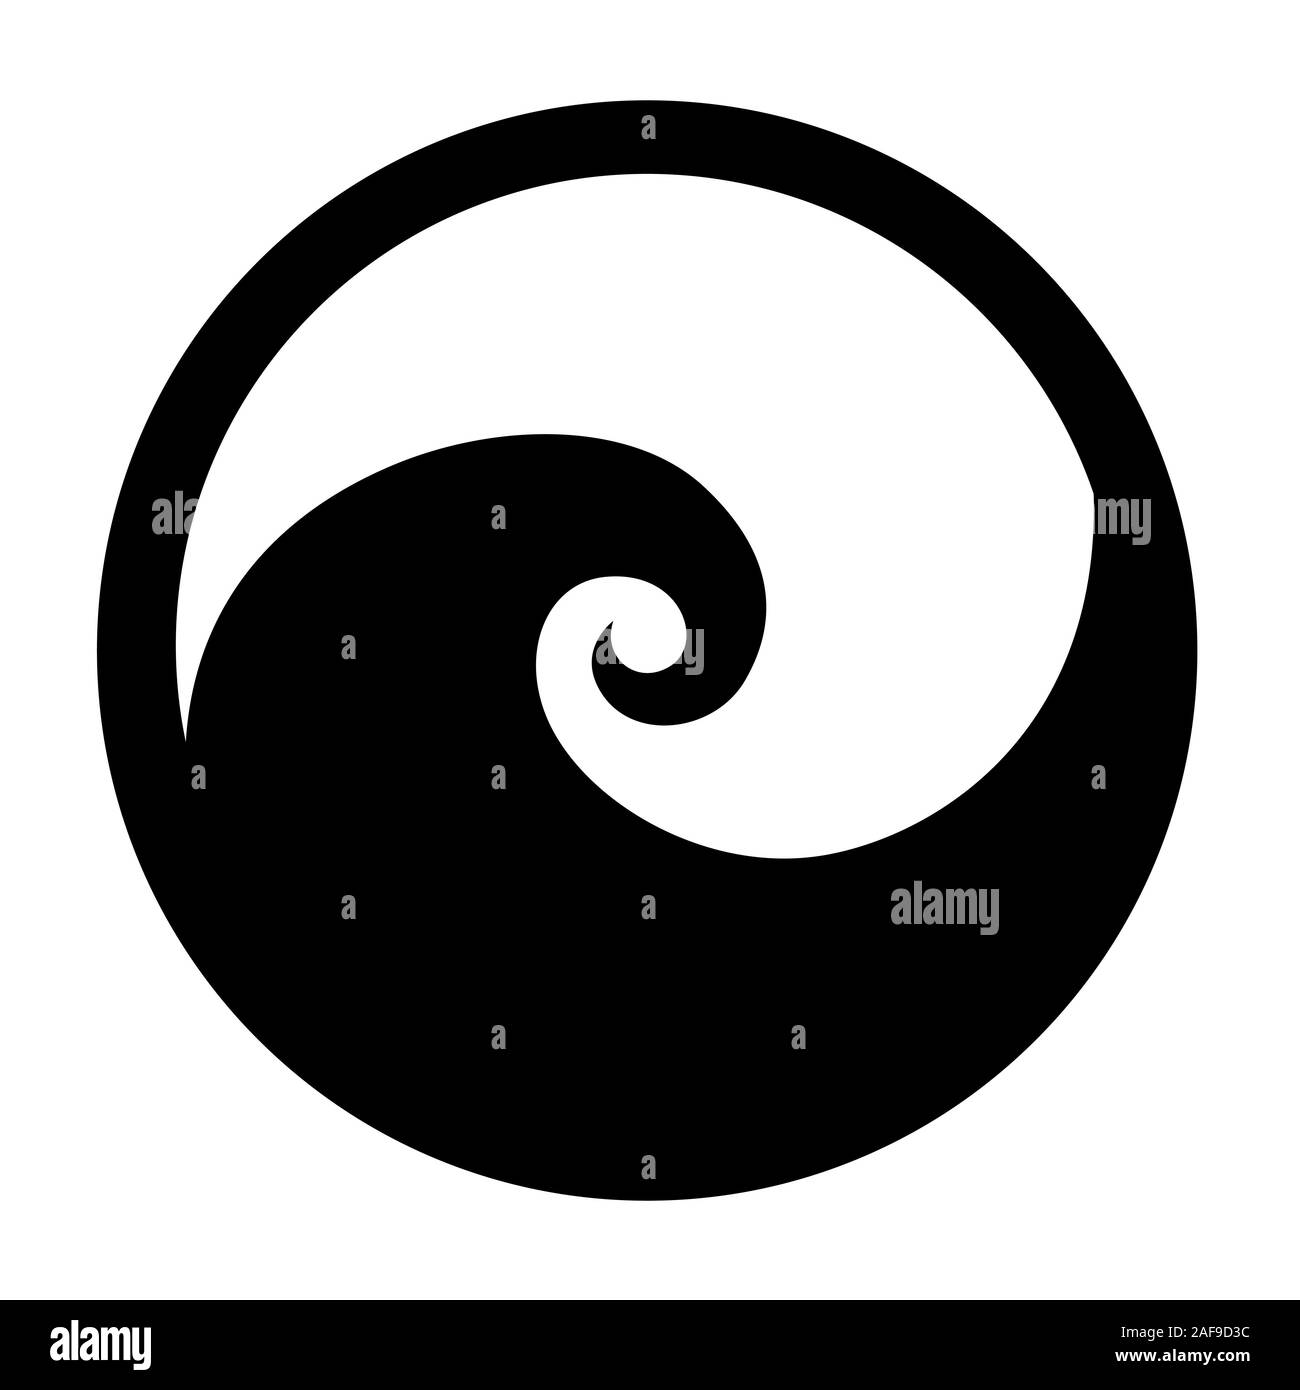 L'icône en spirale Koru stylisé noir tatouage tribal maori Nouvelle-zélande logo style Kiwiana Illustration de Vecteur